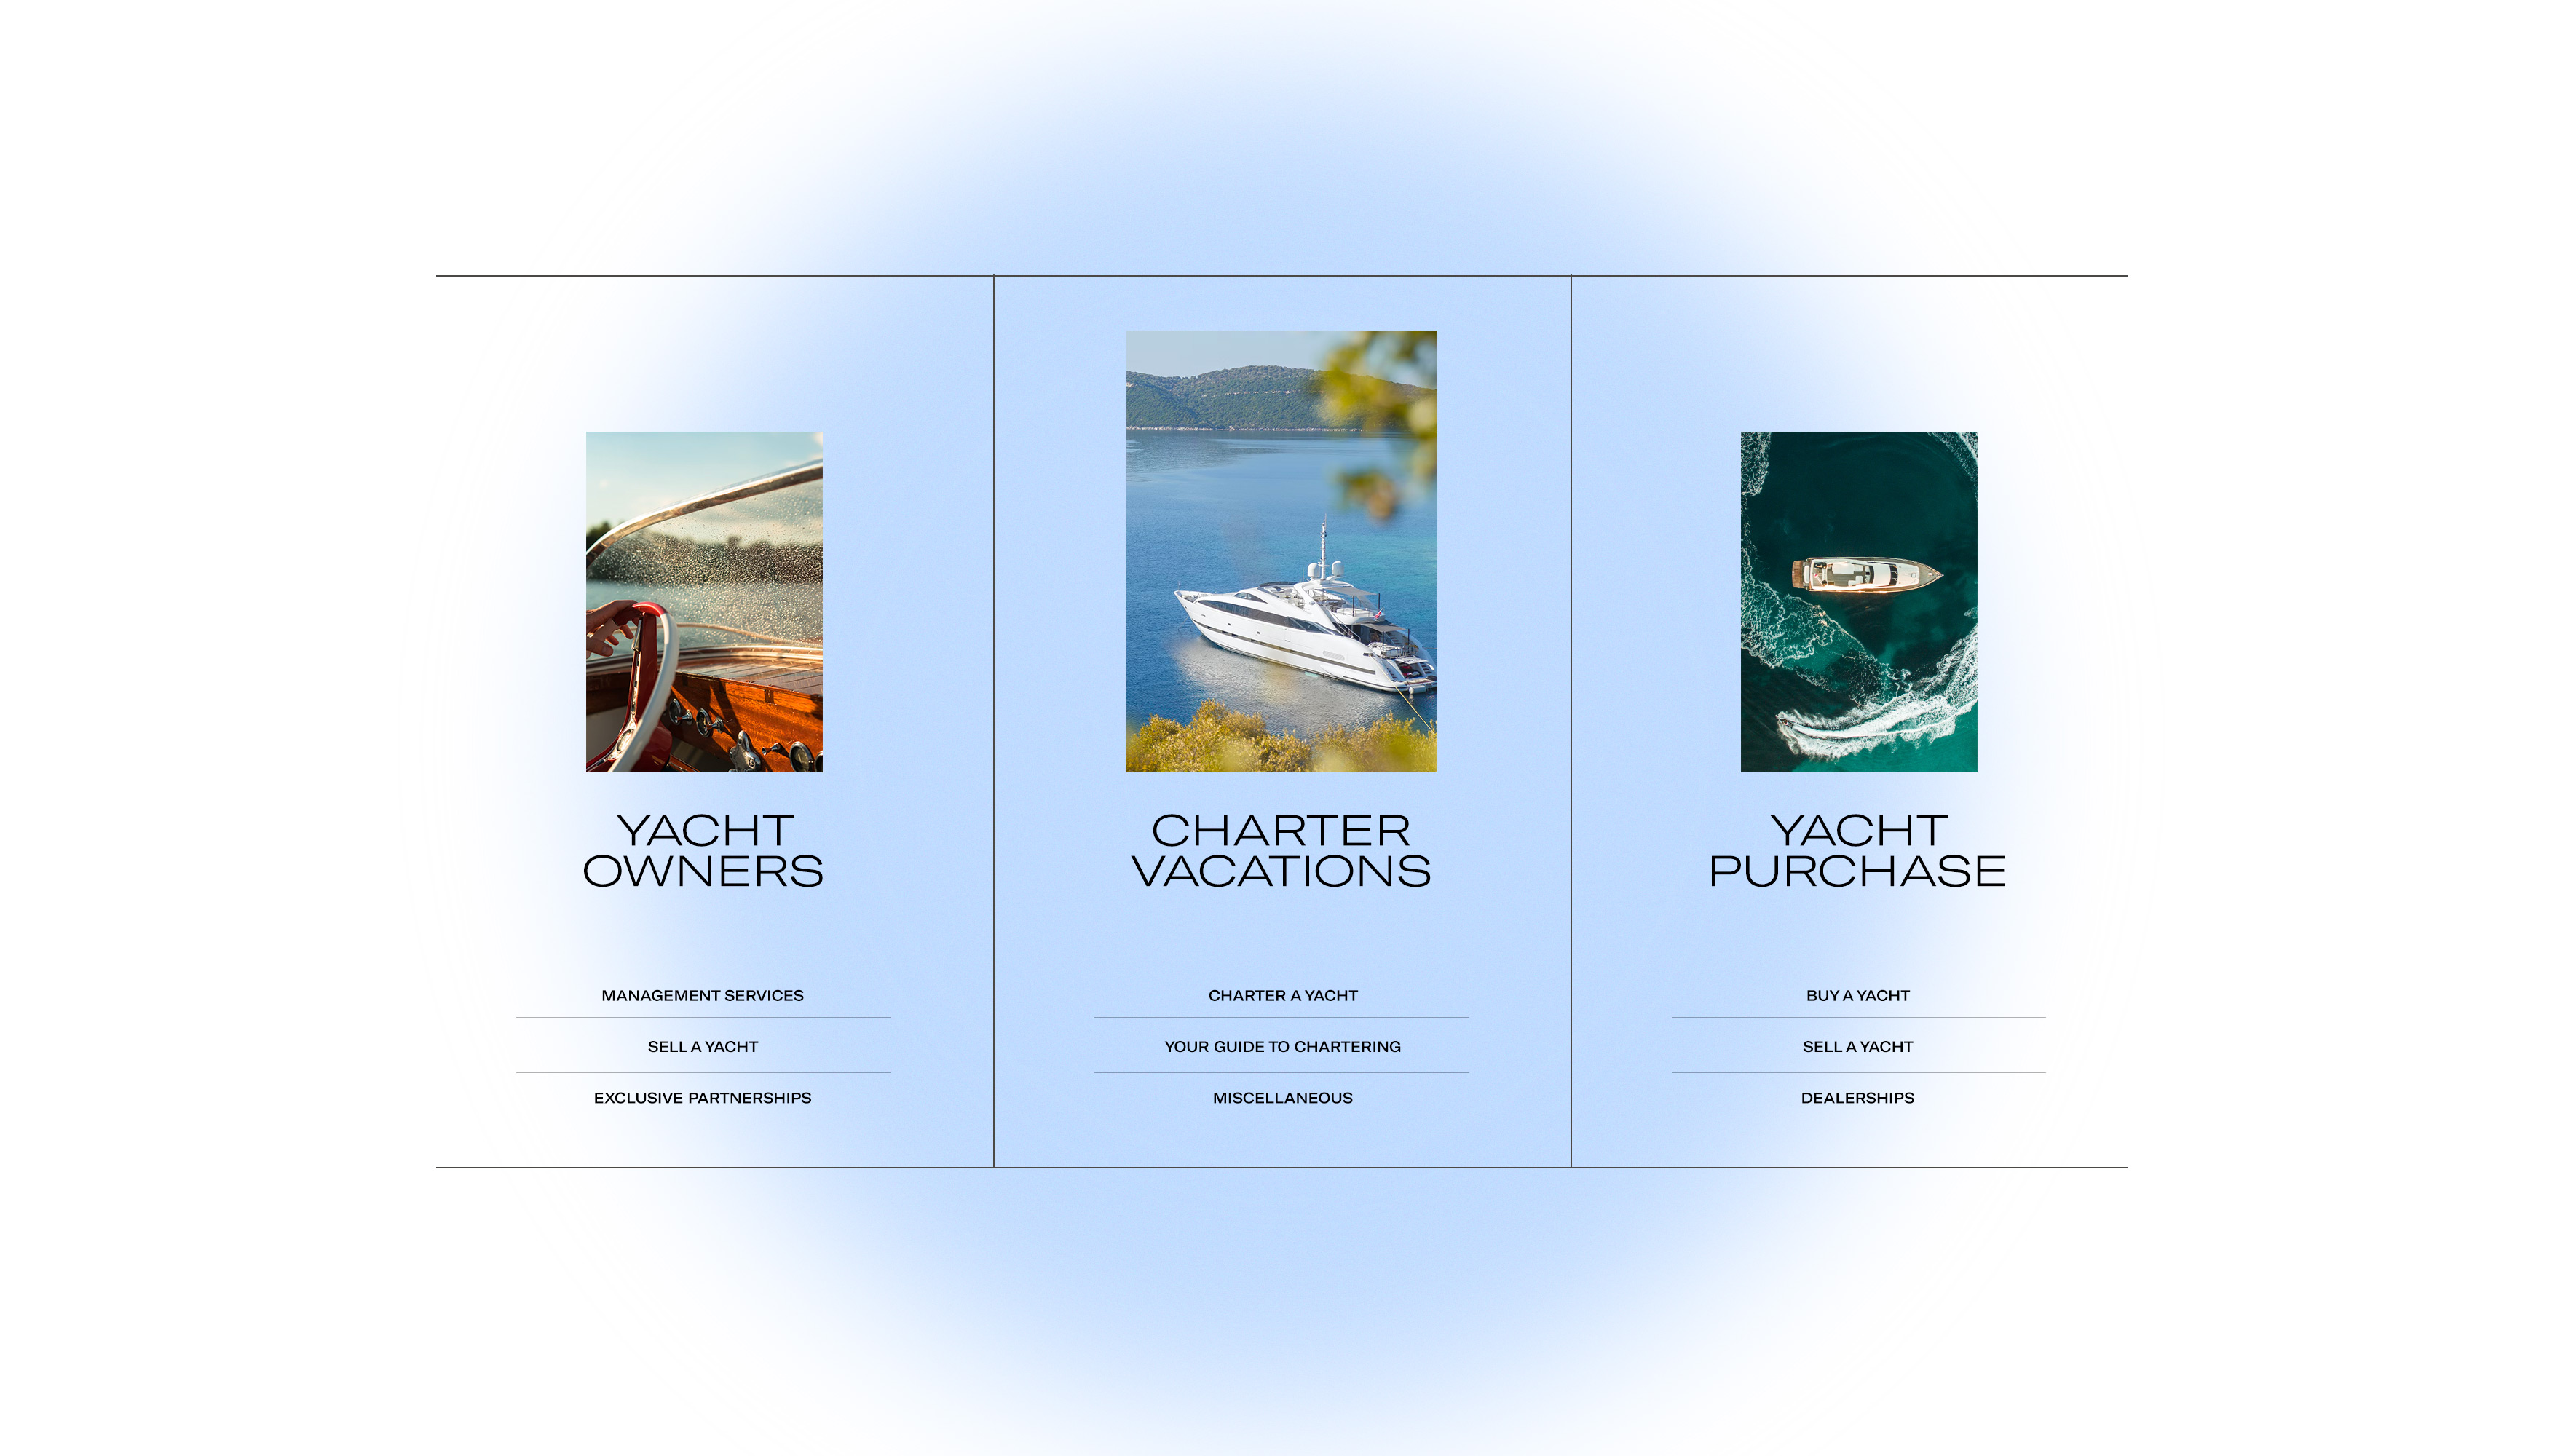 riginos yachts website design services kommigraphics